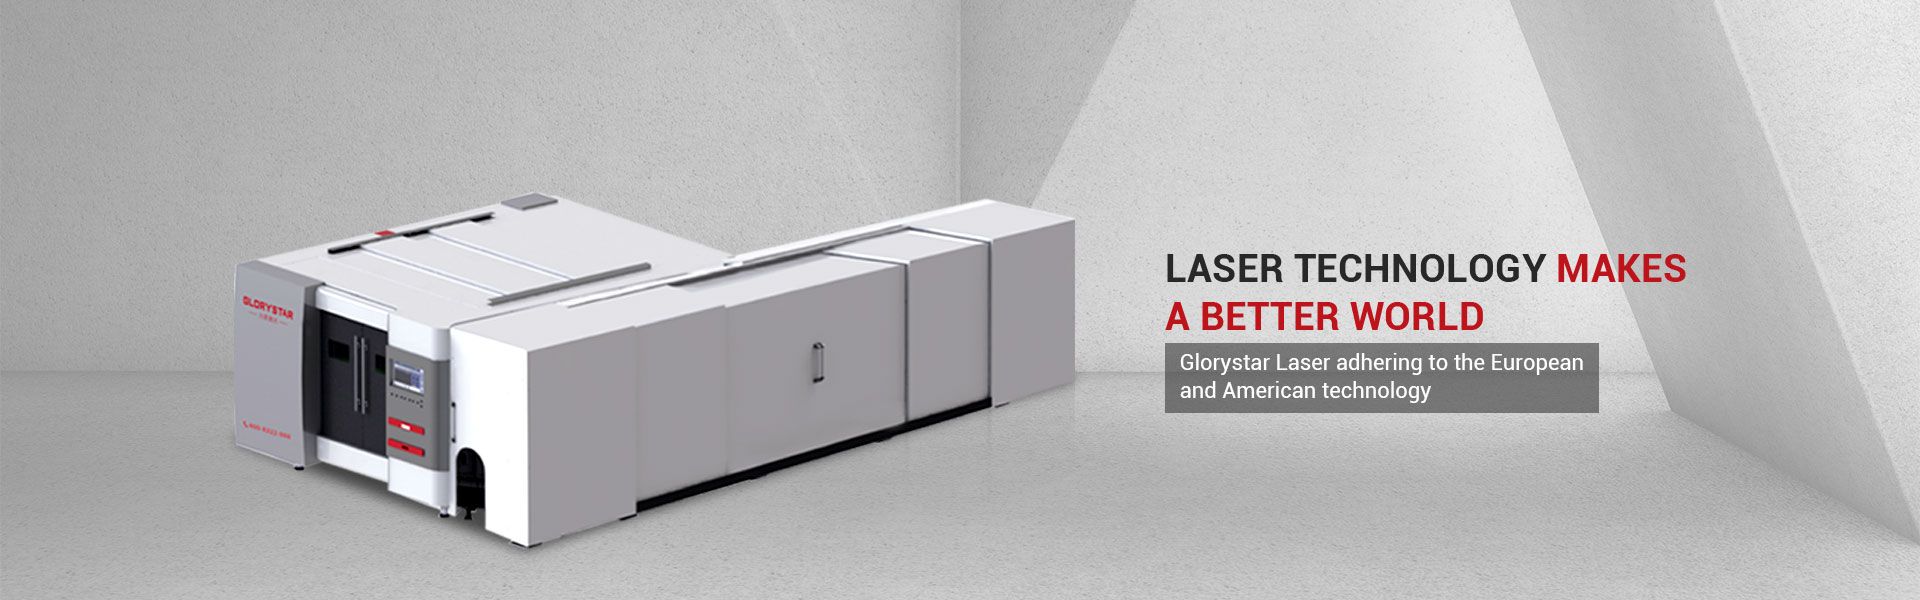 Dongguan GloryStar Laser Technology Co., Ltd.